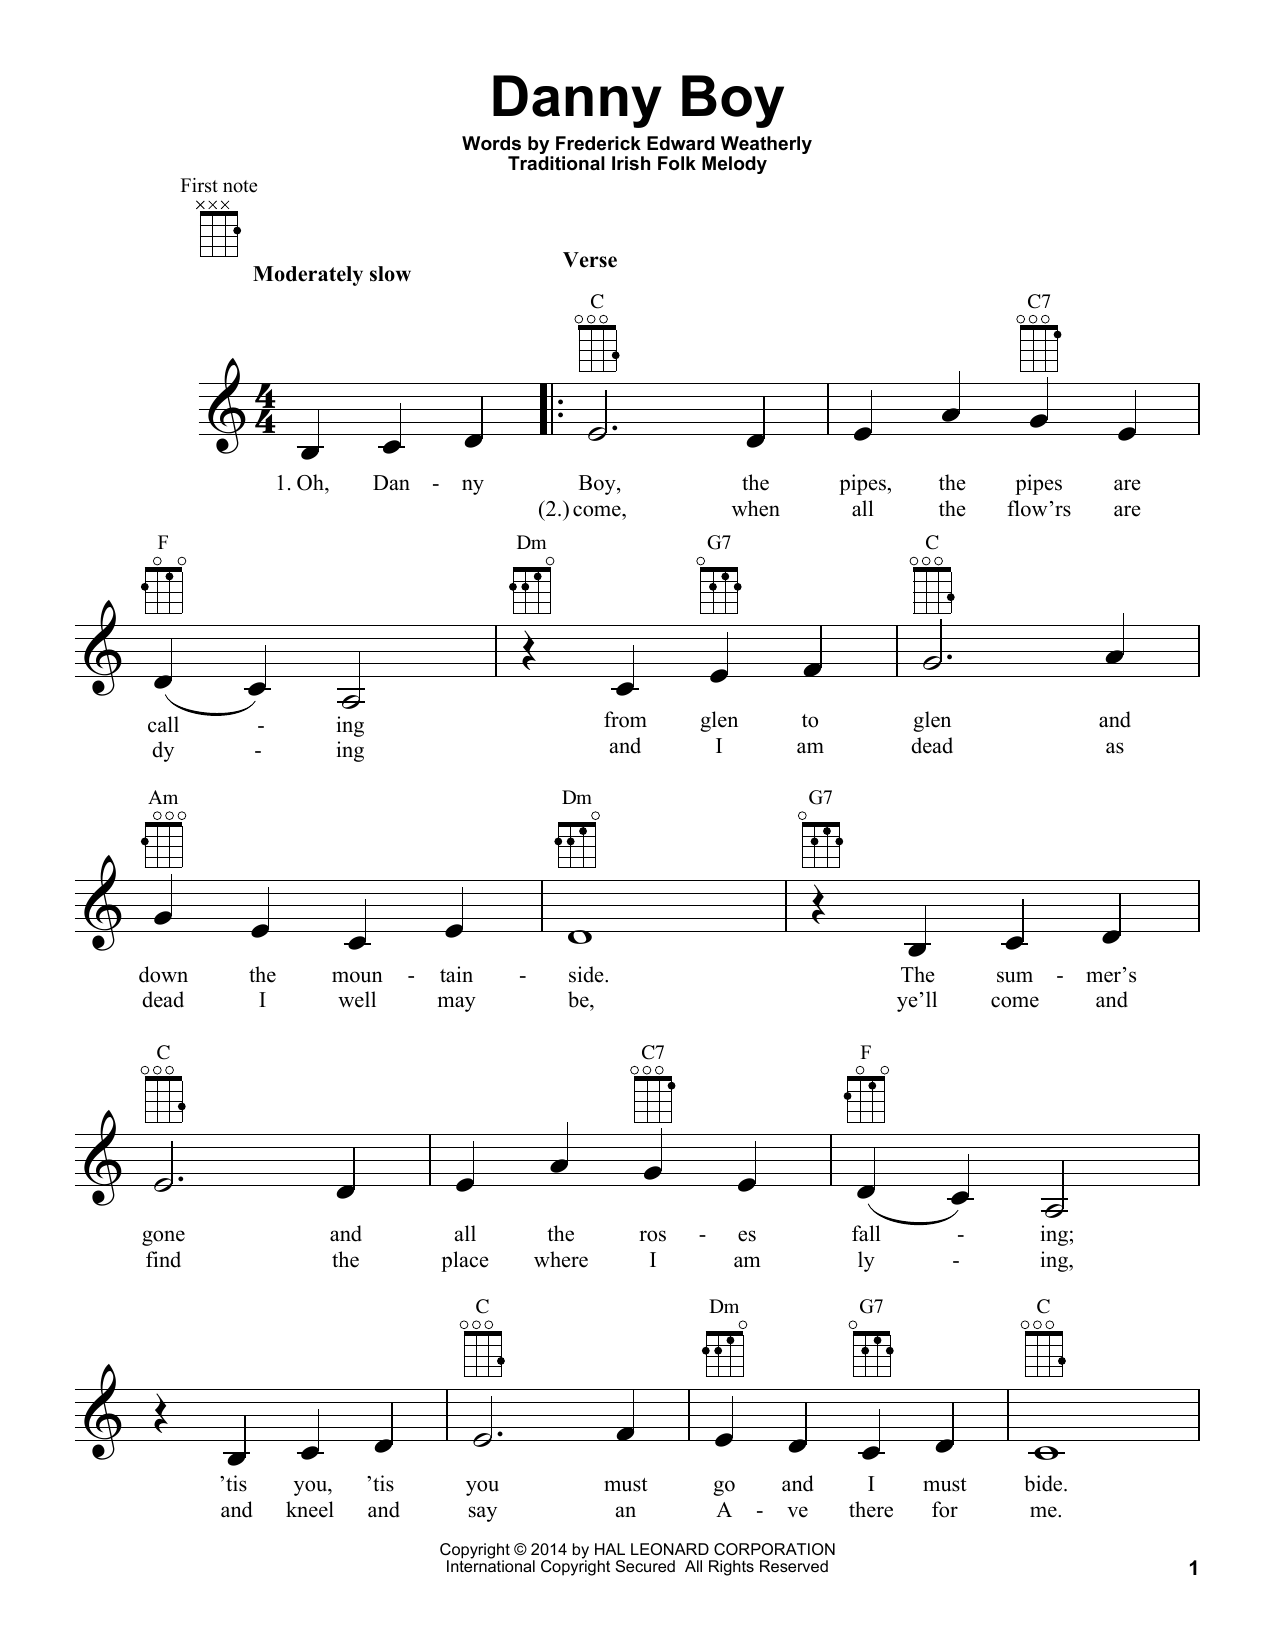 Traditional Irish Danny Boy Sheet Music Notes & Chords for Ocarina - Download or Print PDF